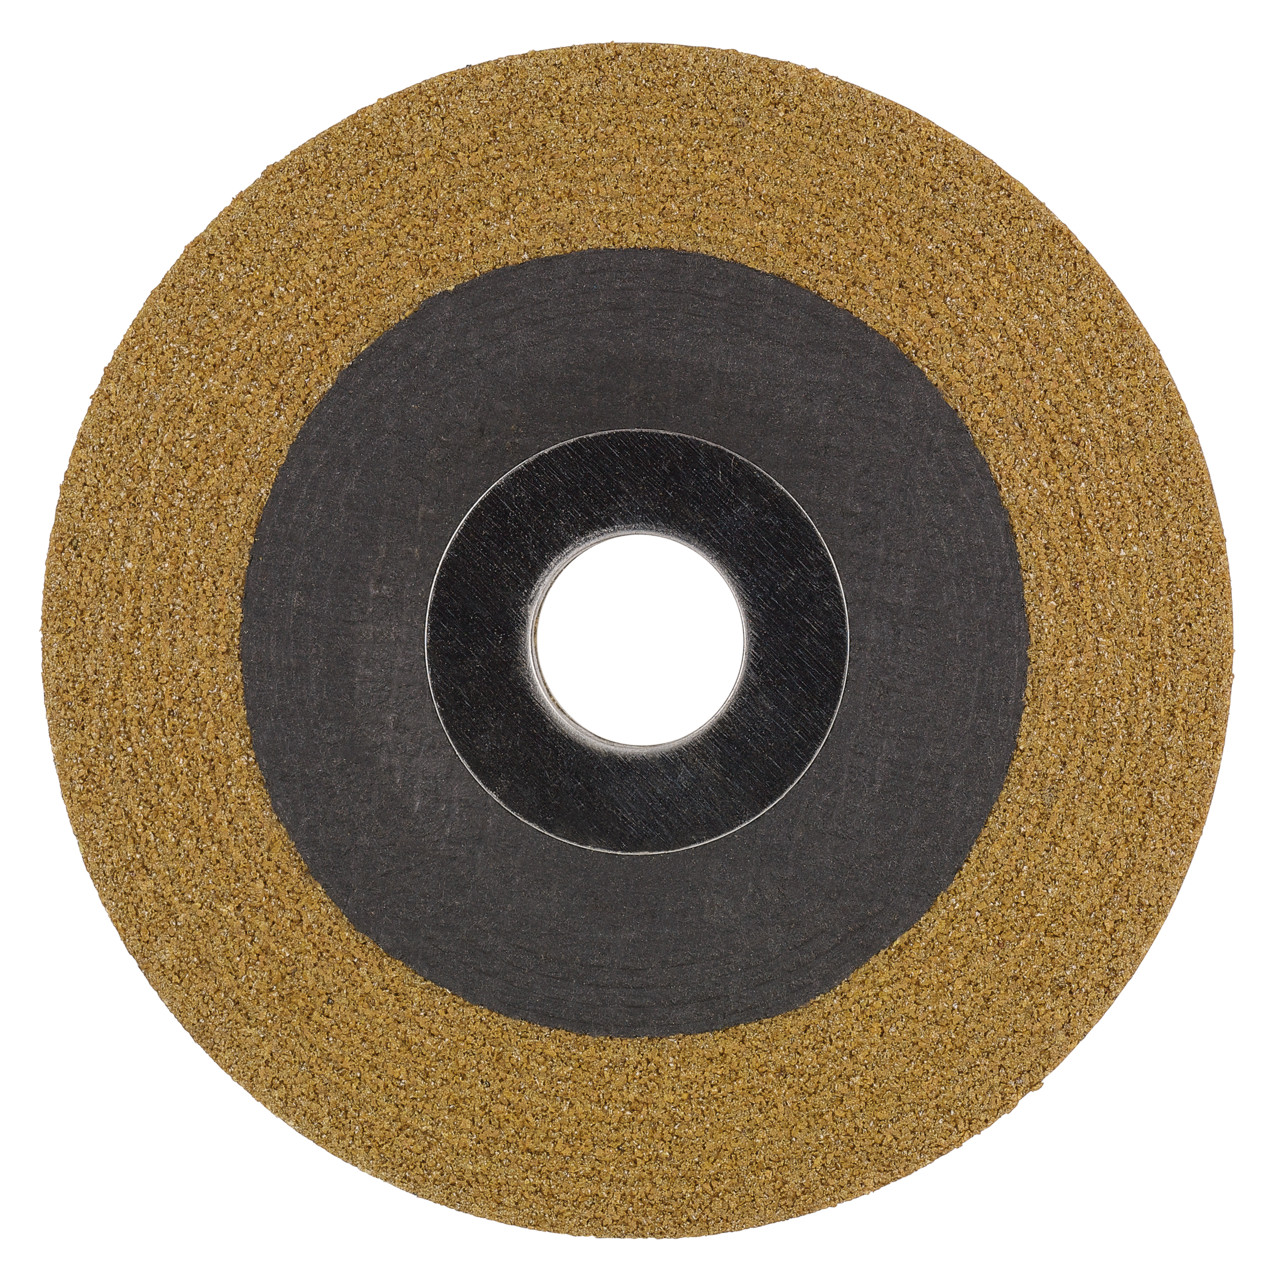 TYROLIT disco de desbaste DxUxH 115x7x22,23 Para metales no férricos, forma: 27 - diseño offset, Art. 576049